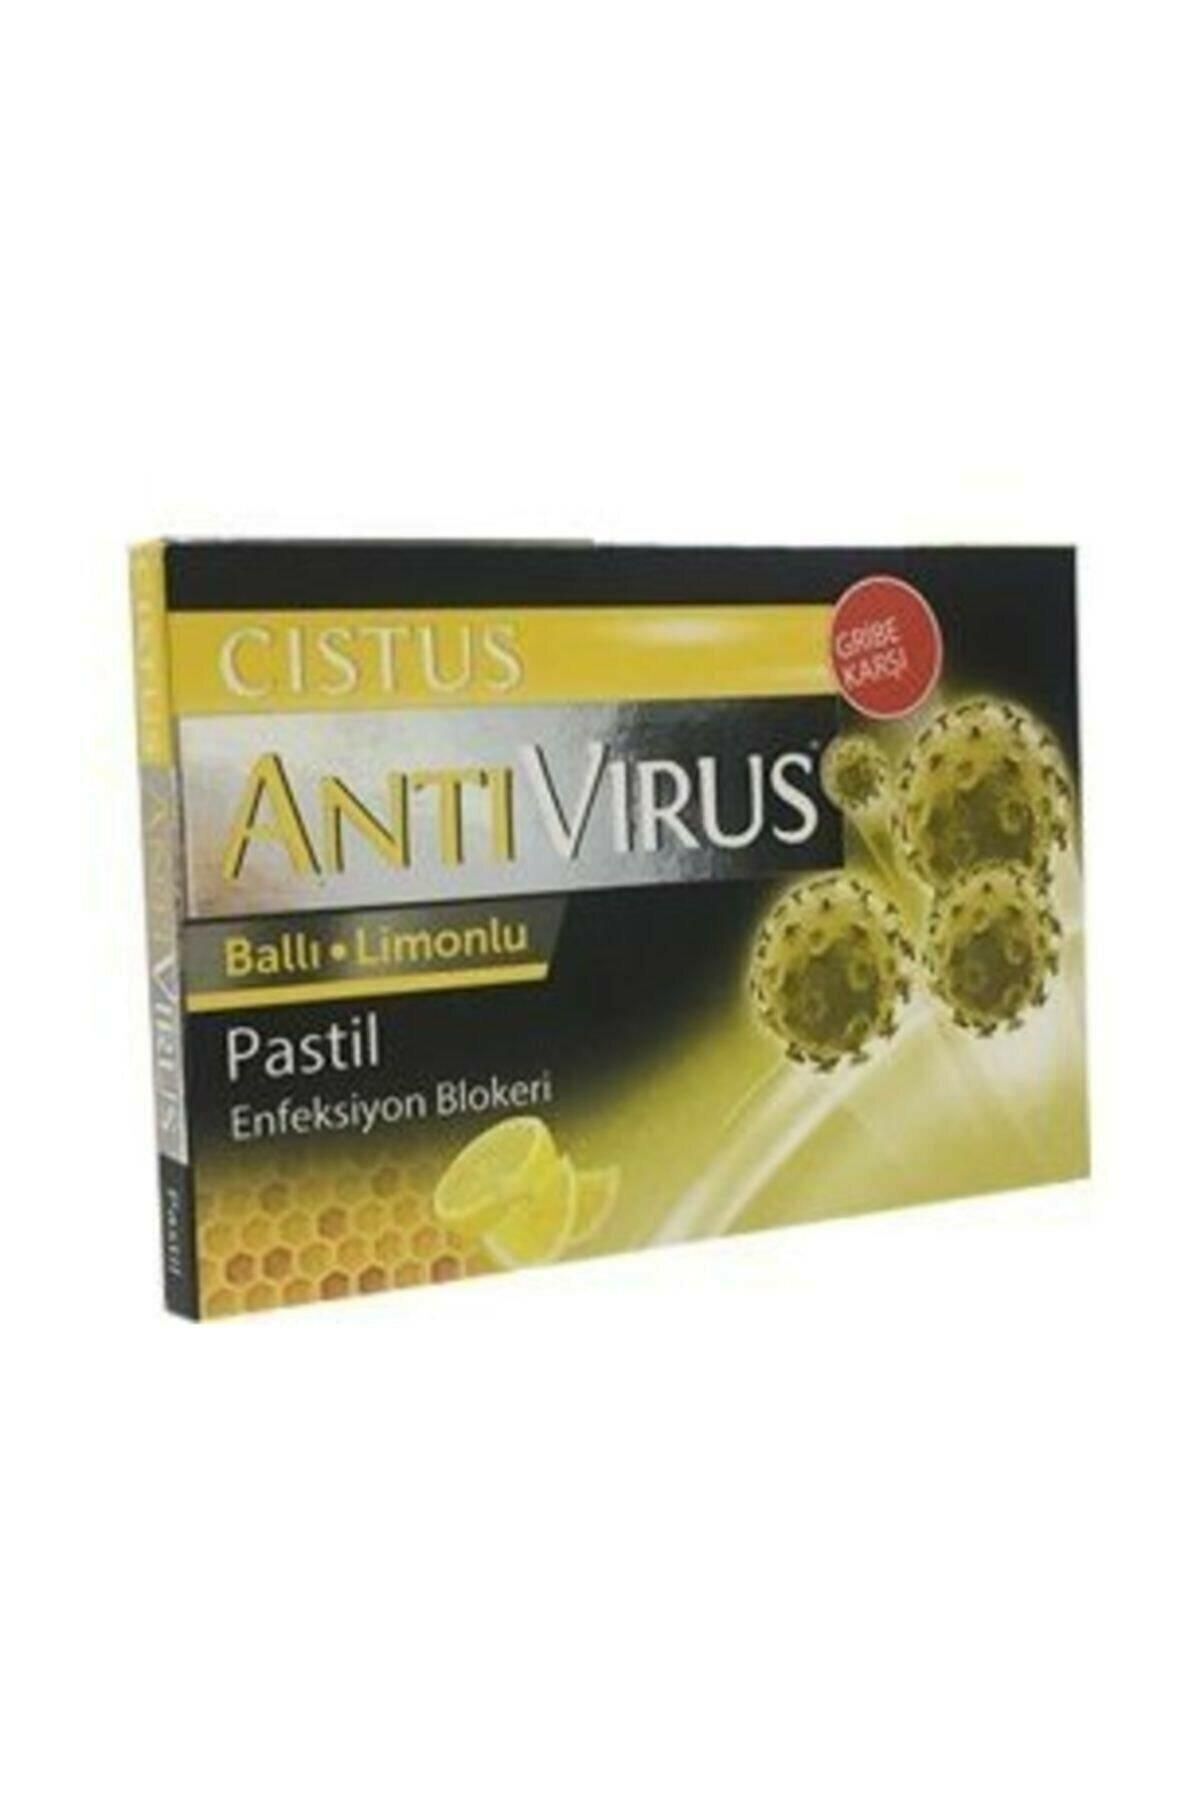 CISTUS Antivirus Pastil Ballı Limonlu